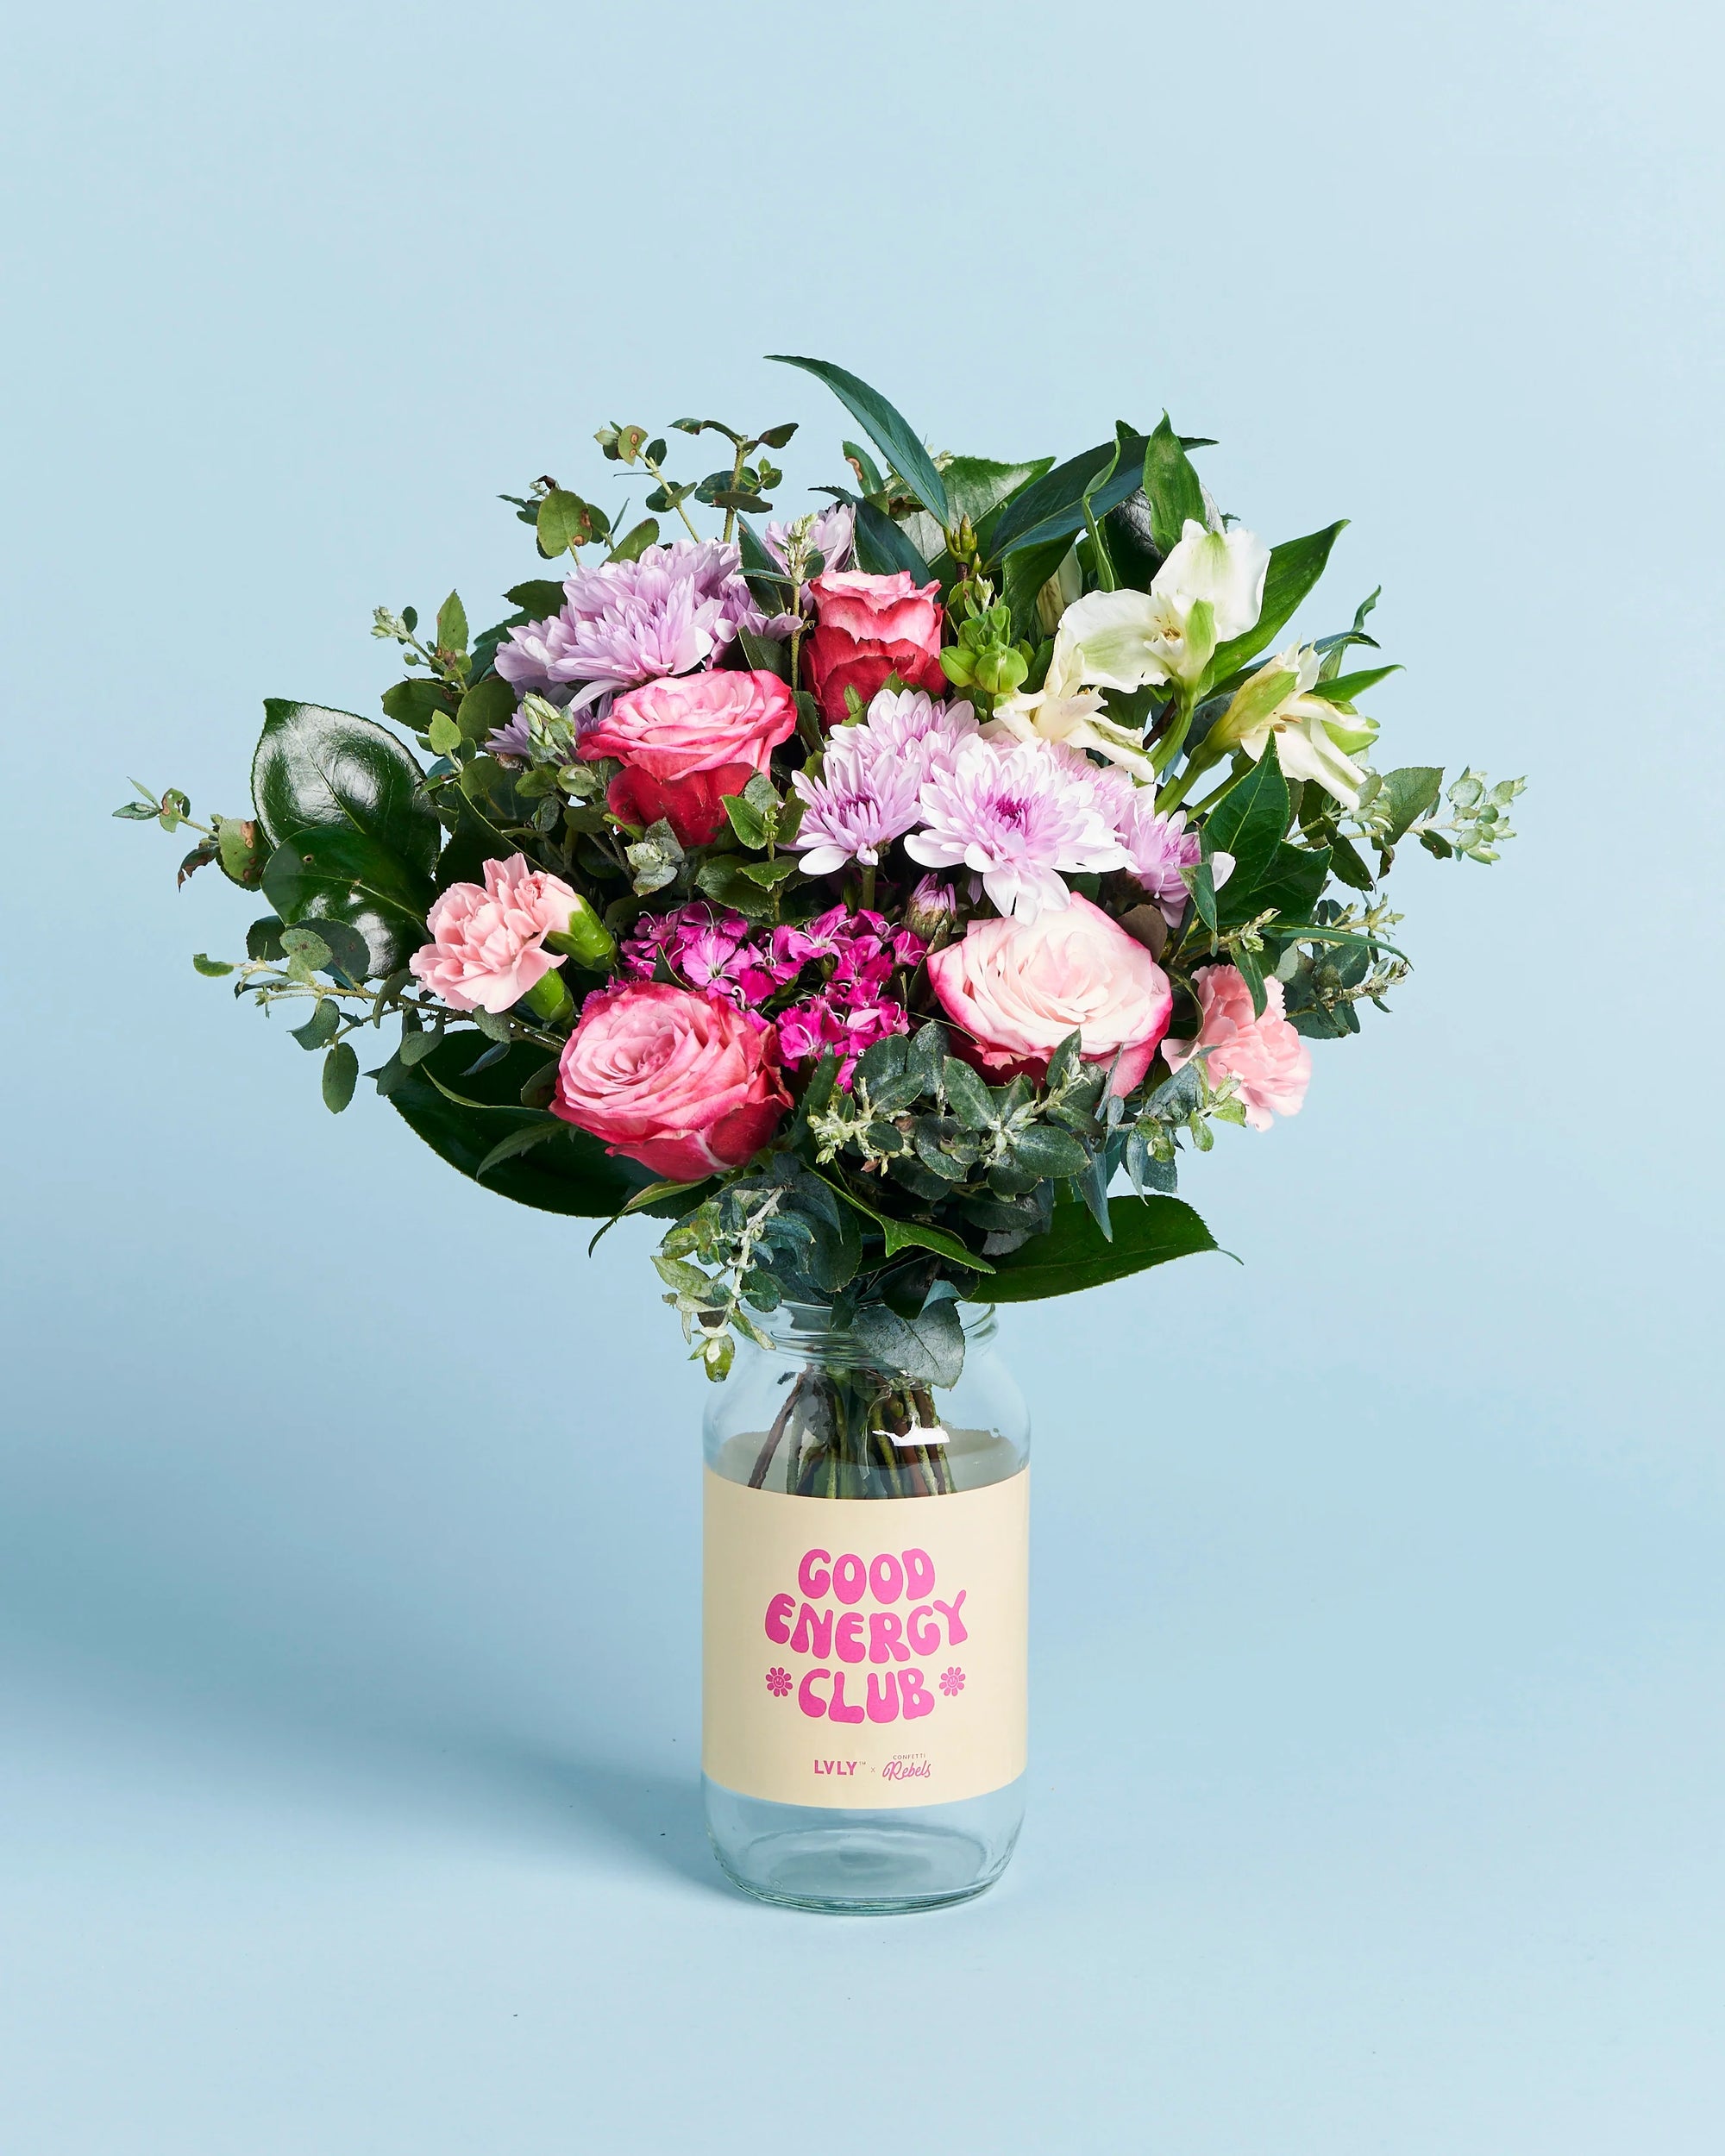 'Good Energy Club' Flower Jar